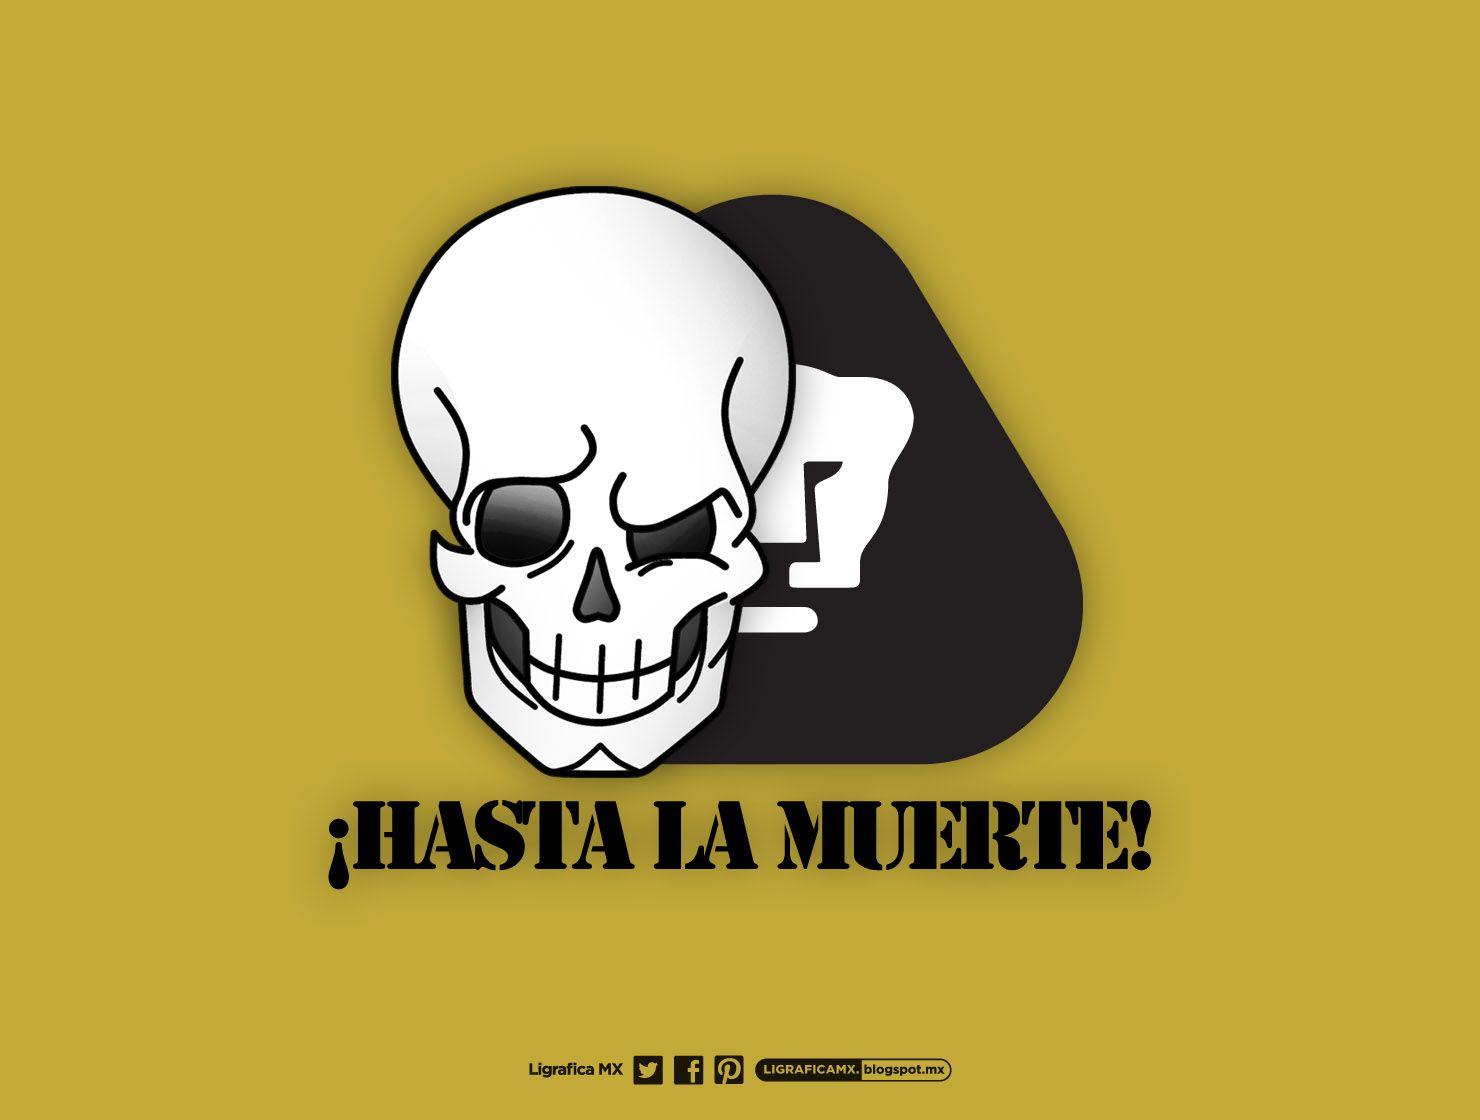 Pumas #HastaLaMuerte #LigraficaMX #Wallpaper. pumas u.n.a.m